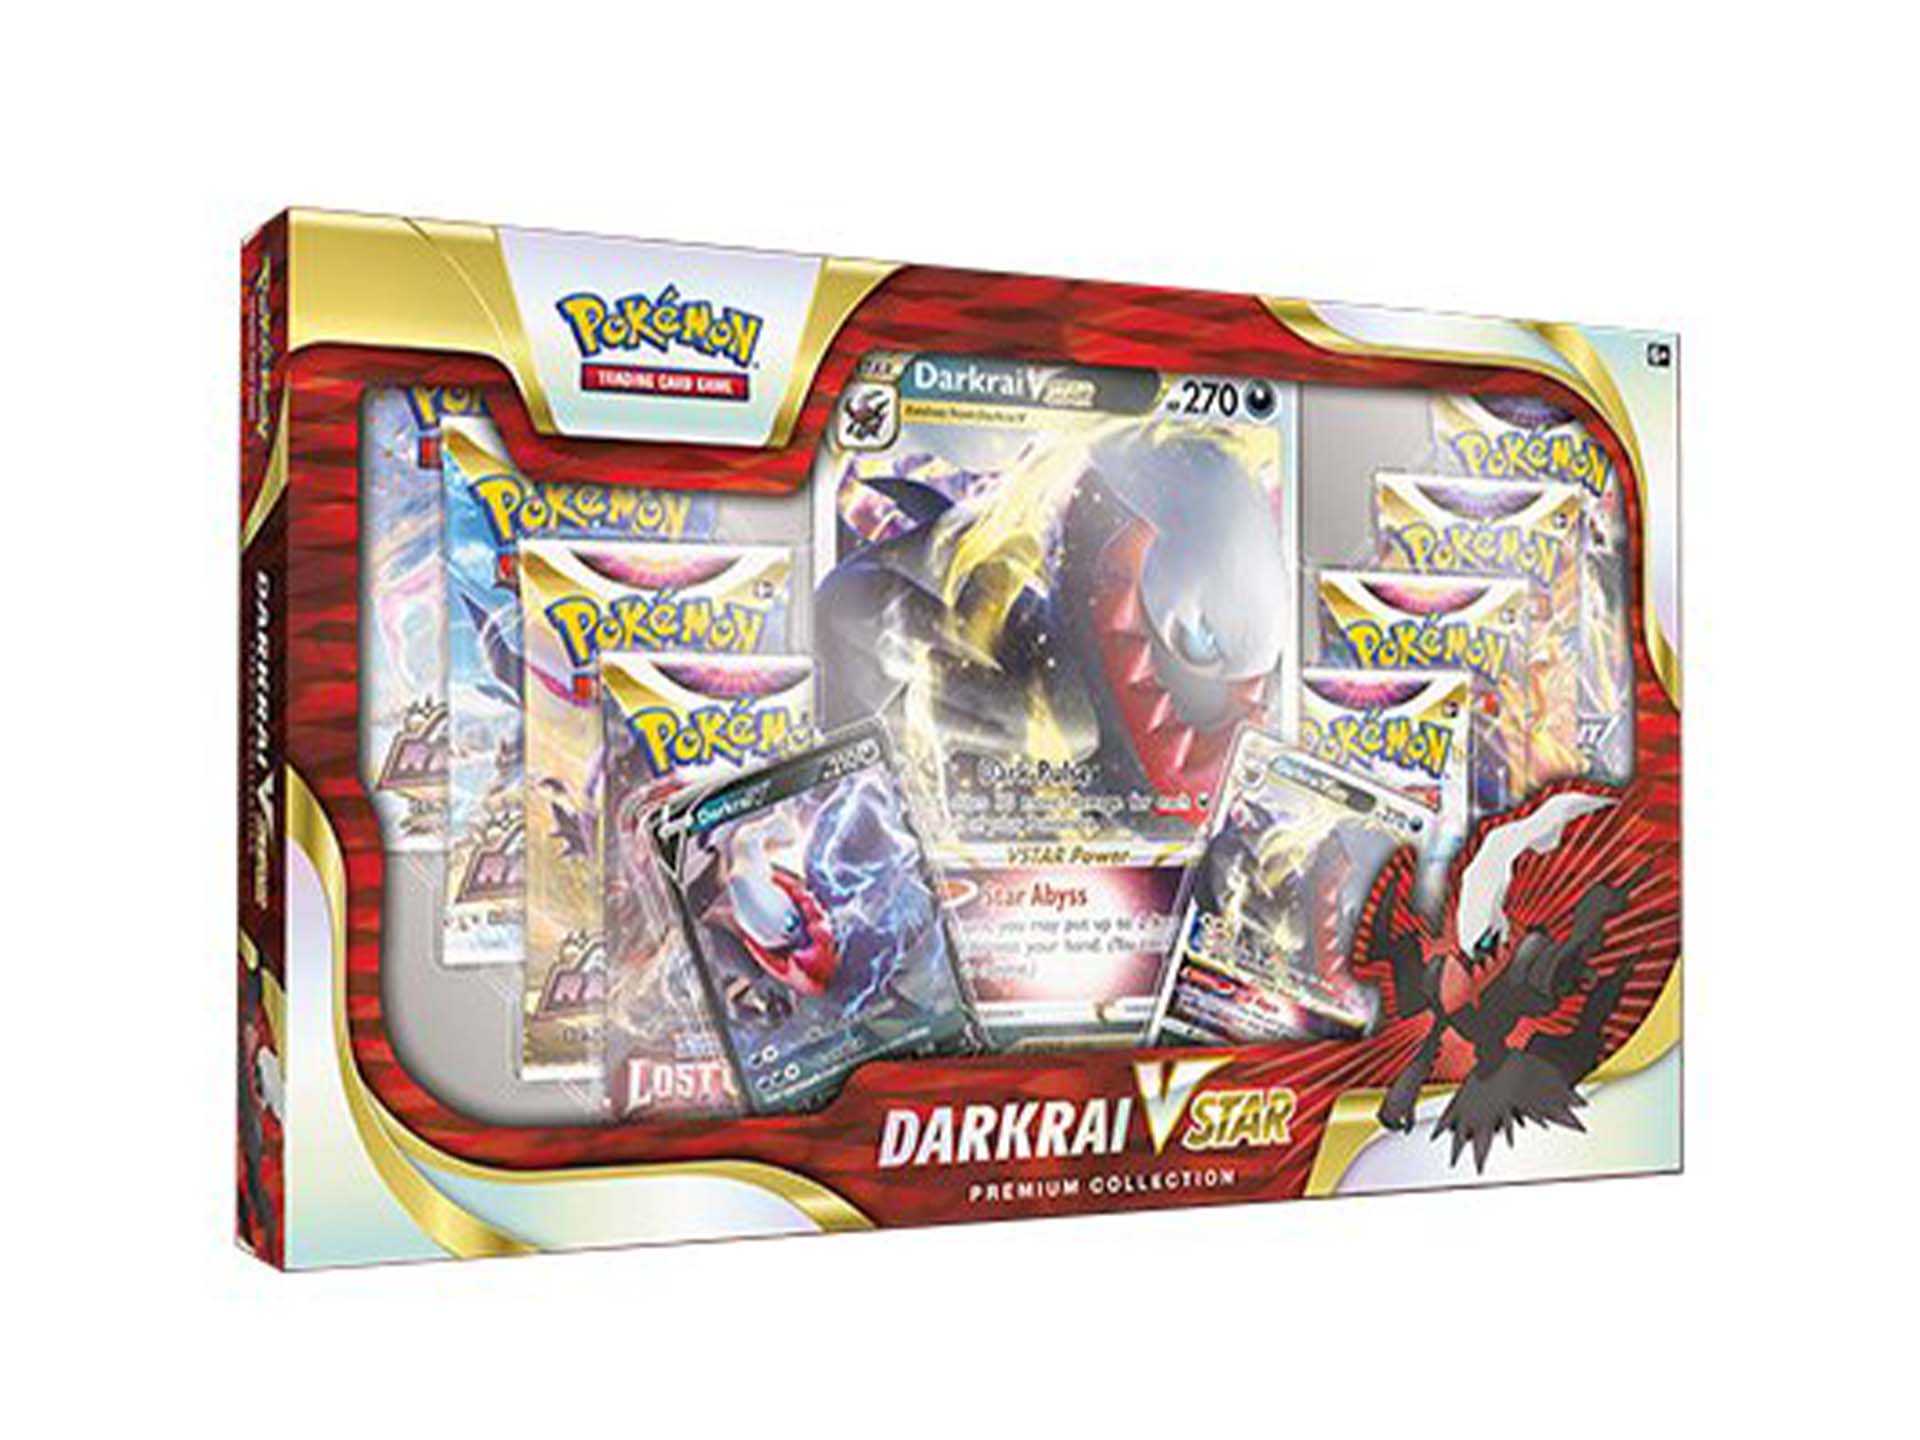 Pokémon Darkrai VSTAR box